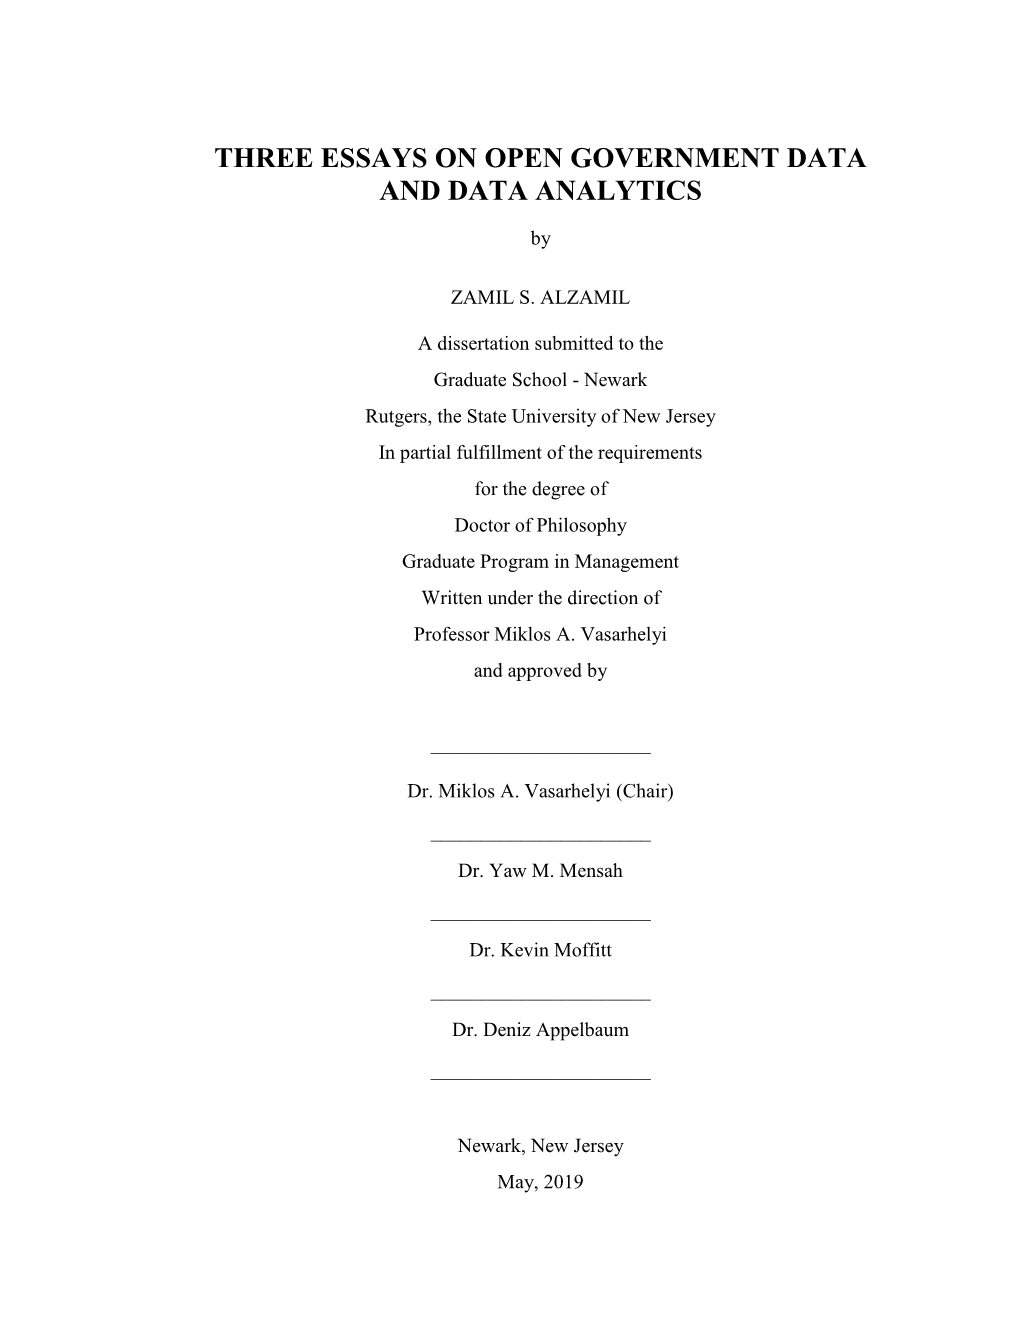 Three Essays on Open Government Data and Data Analytics